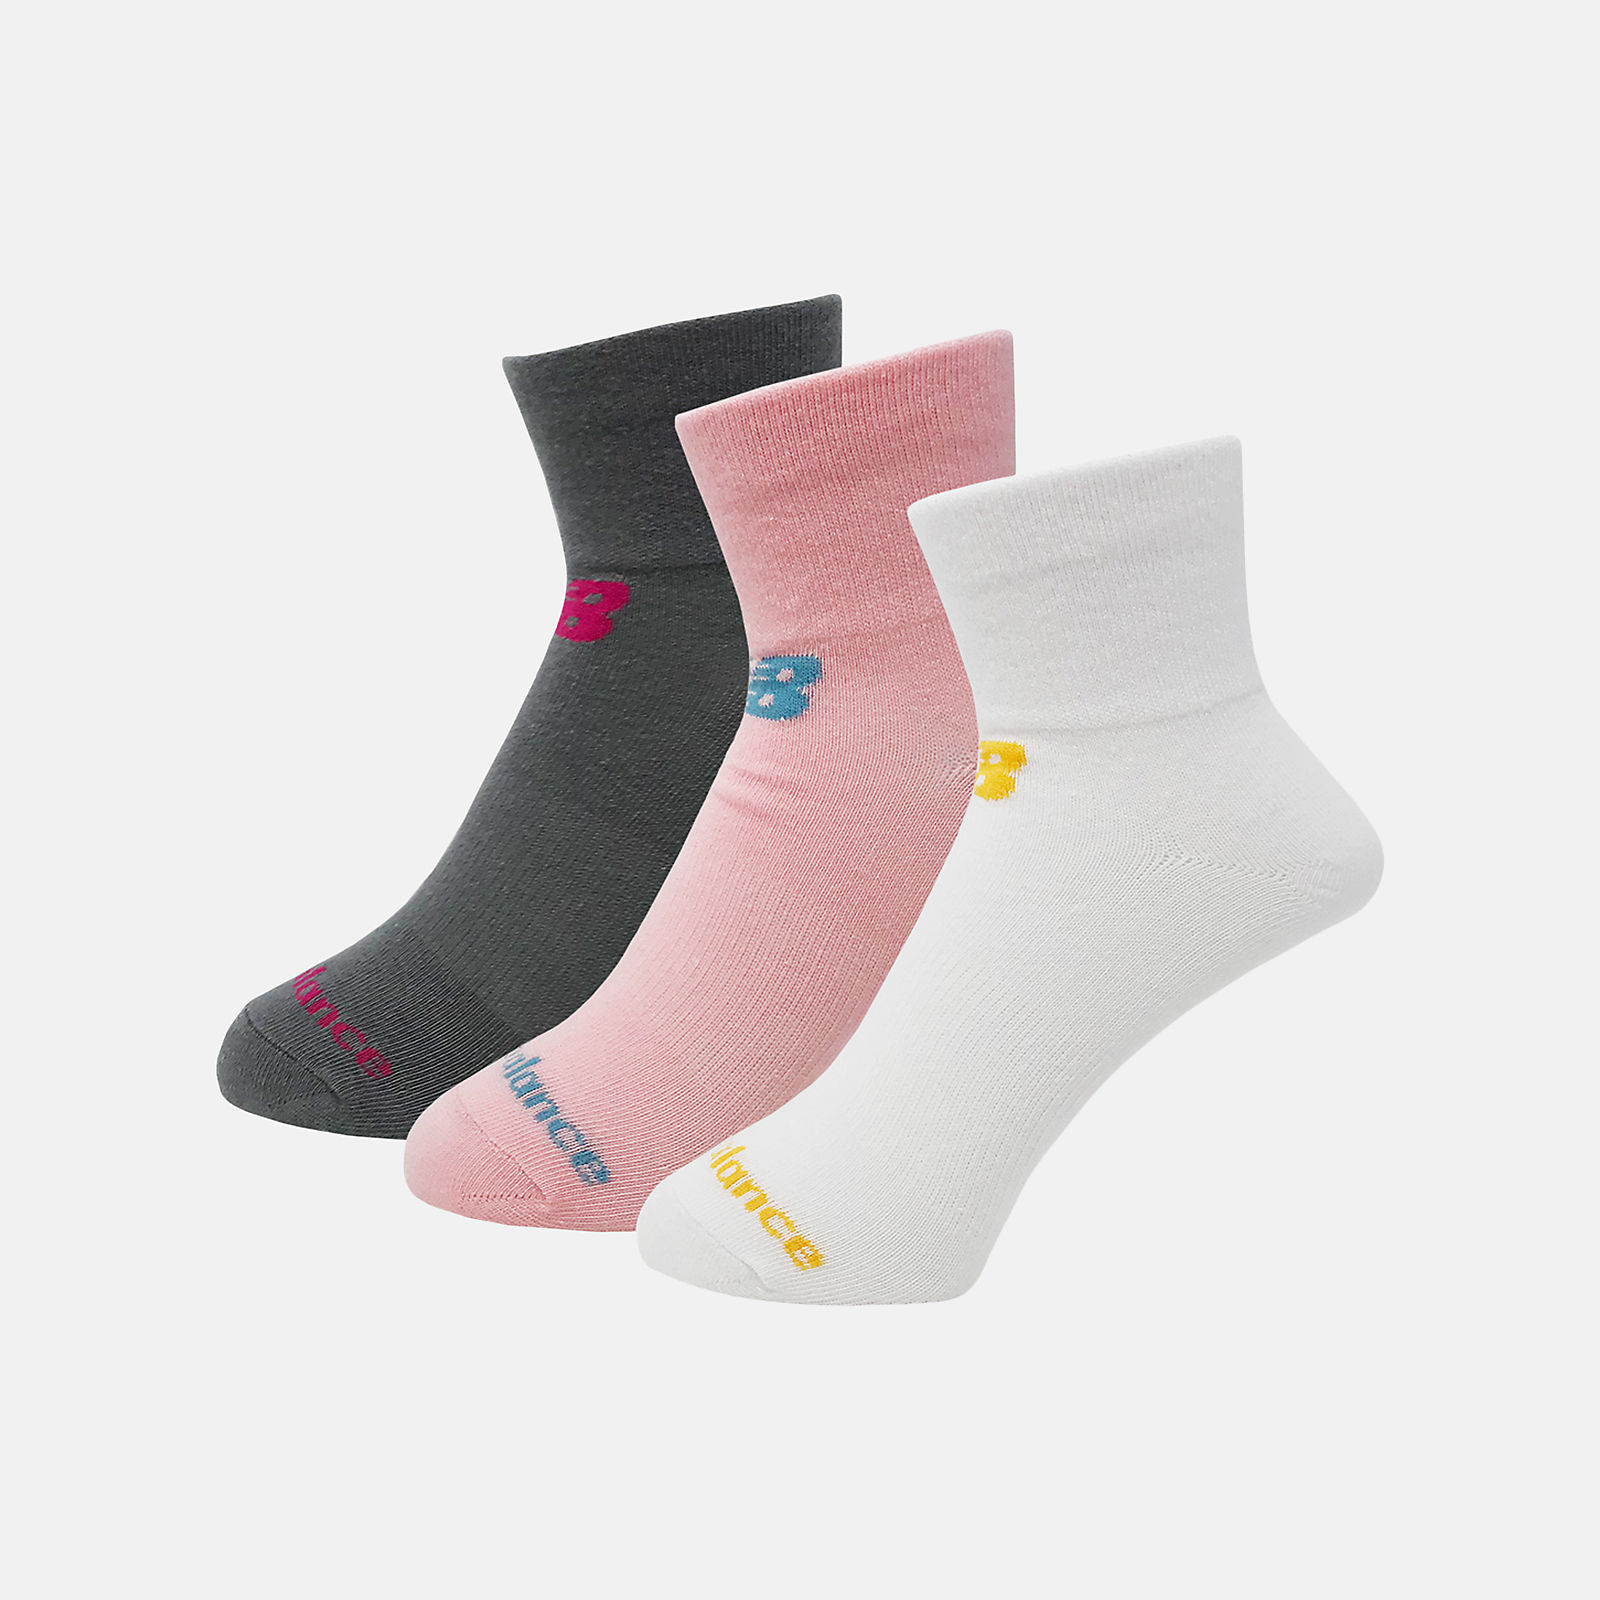 Performance Cotton Flat Knit Ankle Socks 3 Pack - New Balance